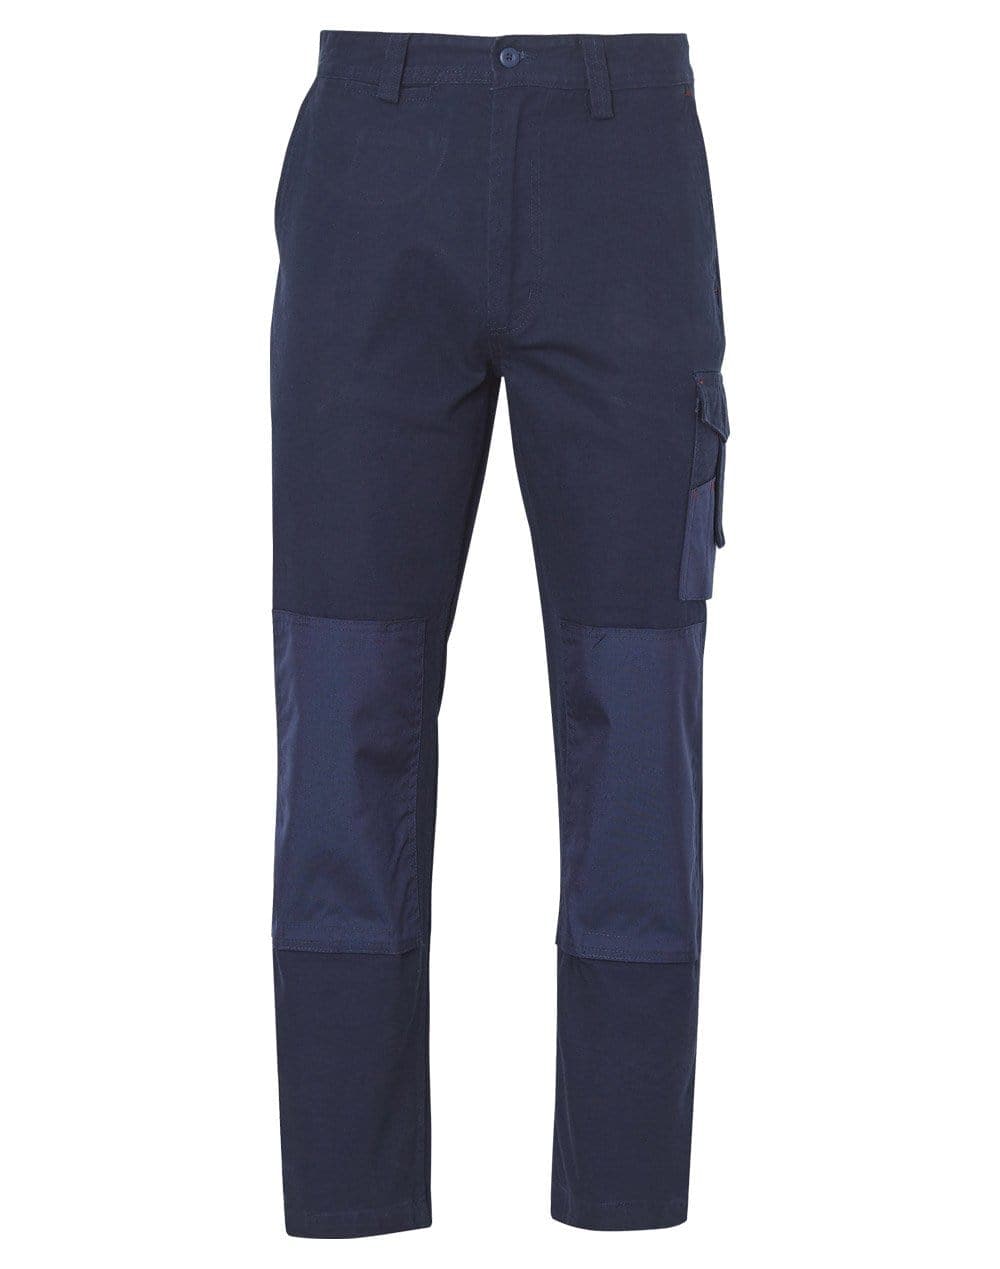 Cargo Work Pants Hi Vis Pant Cotton Drill 3M Tape Tradie AU Standard  Trousers  eBay